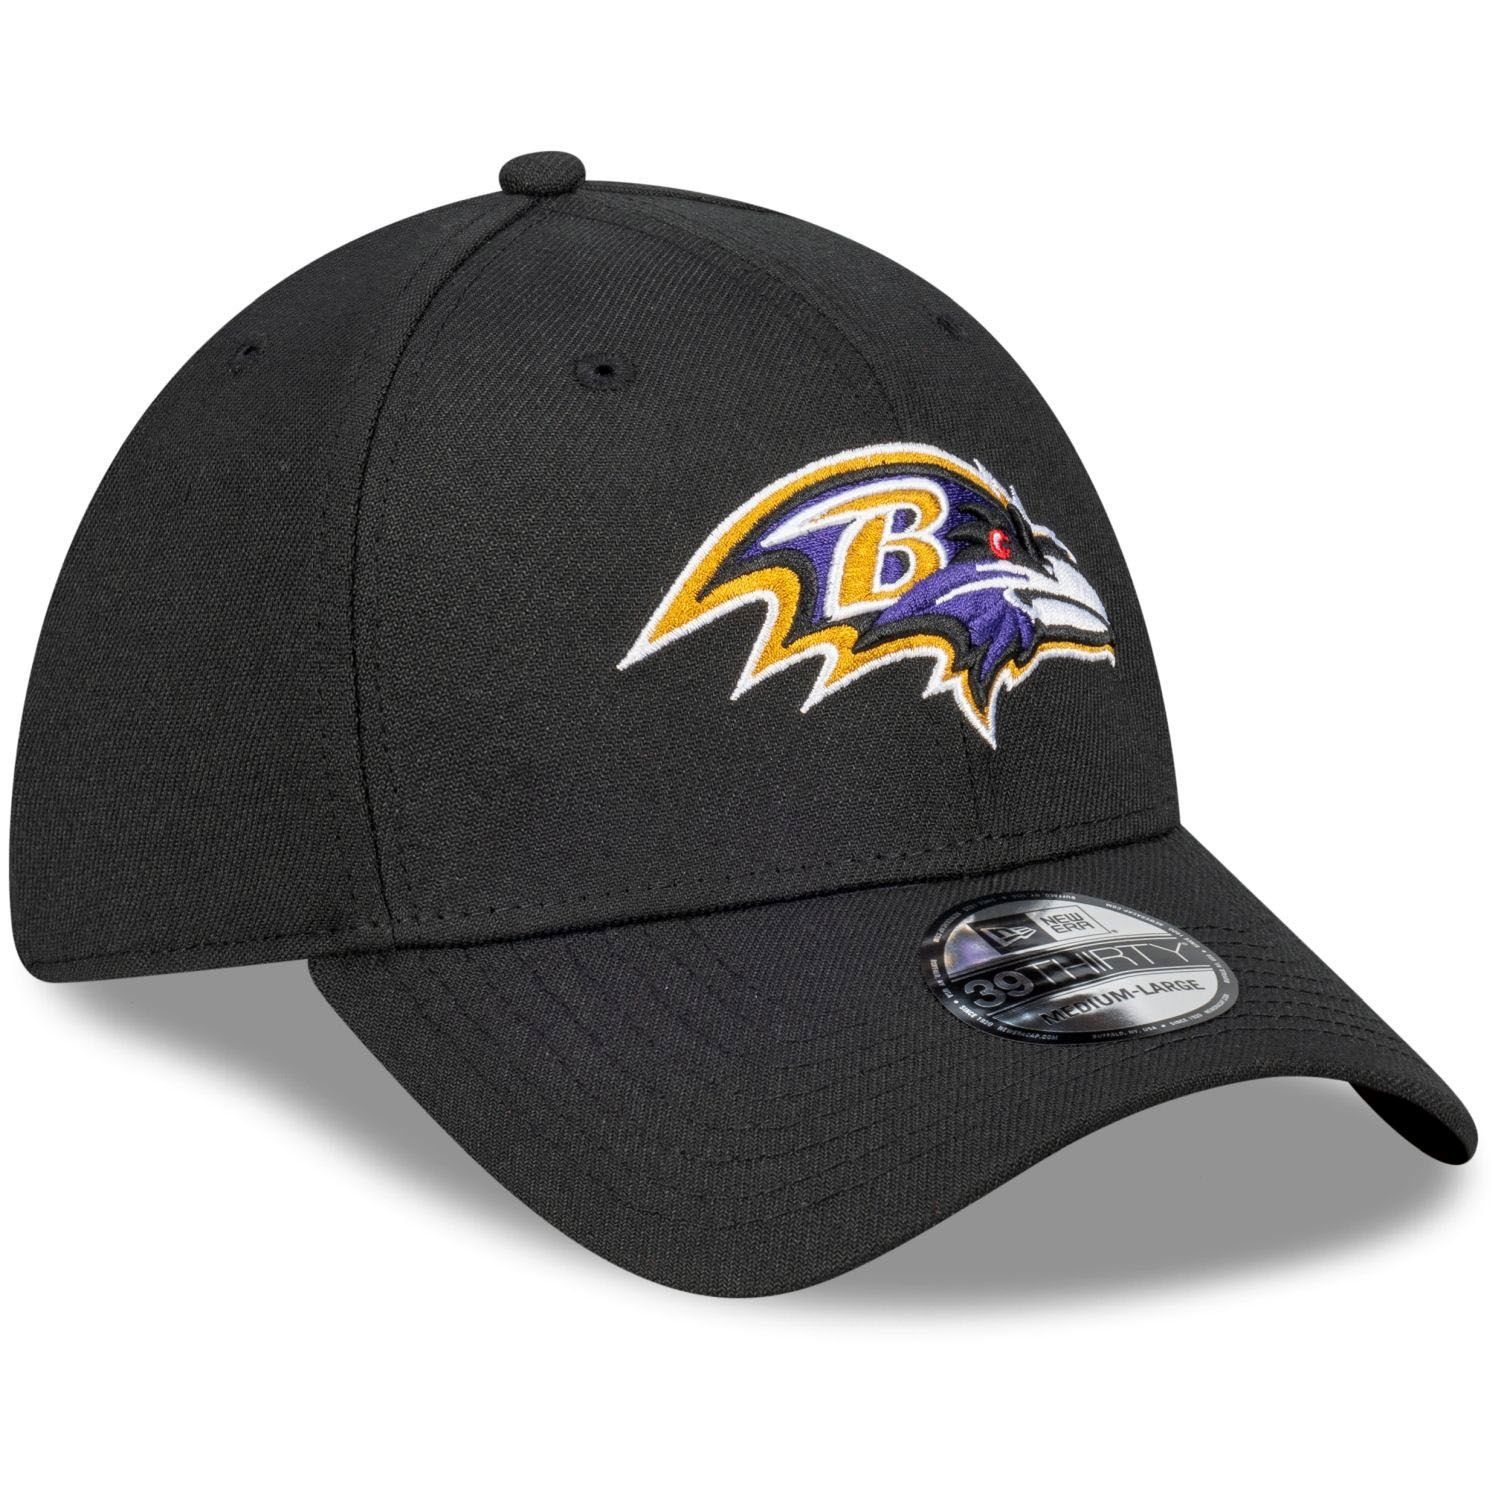 NFL Flex 39Thirty Teams StretchFit Cap Ravens Baltimore New Era